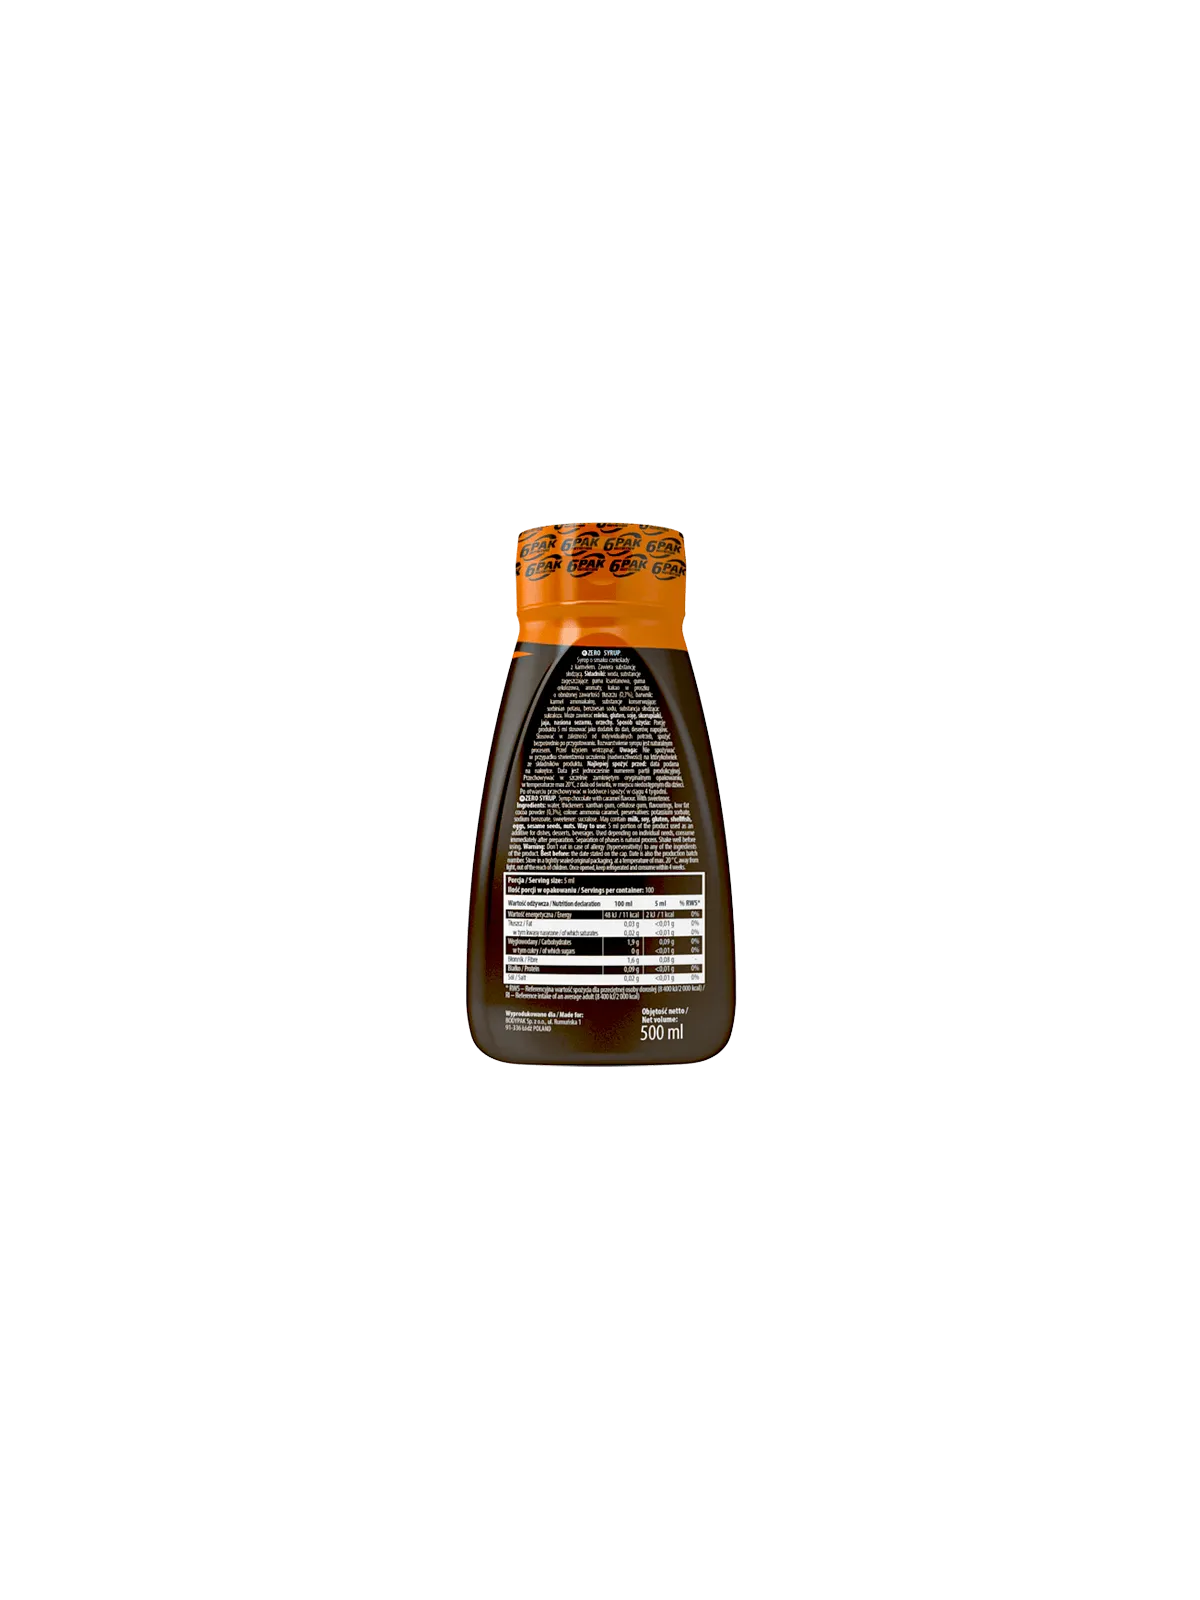 Syrup ZERO Chocolate-Caramel - 500ml